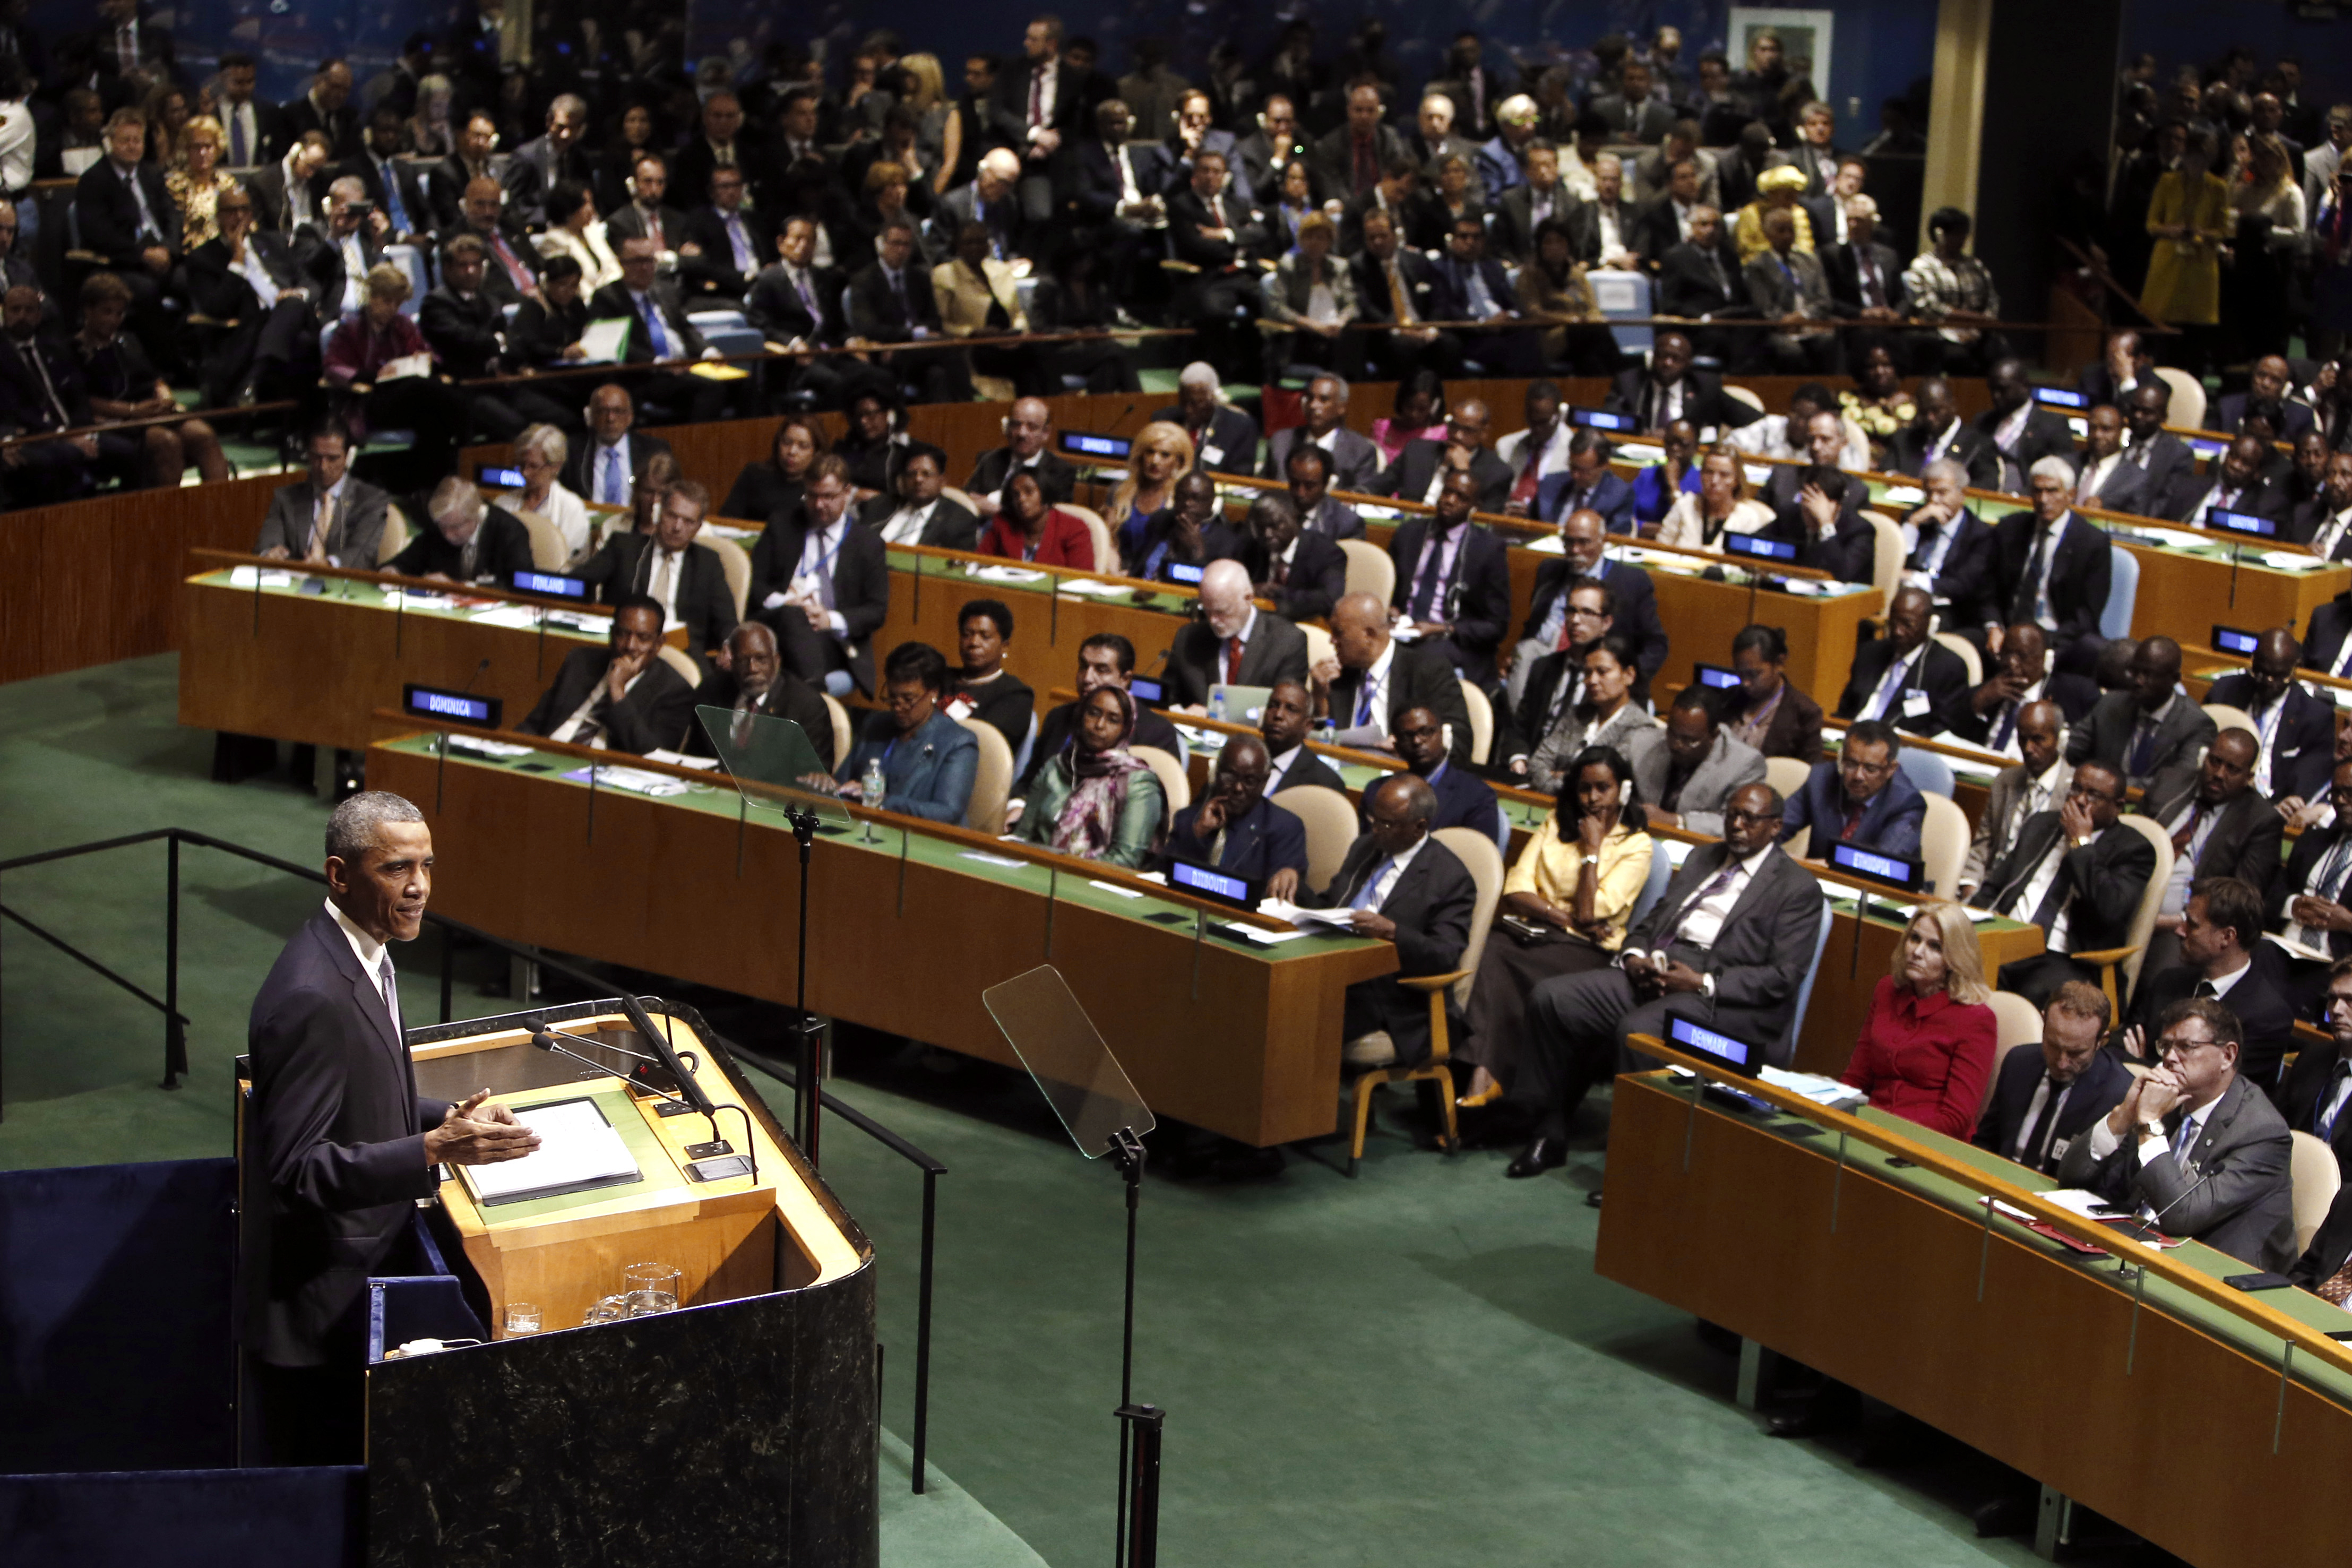 http://hrvatski-fokus.hr/wp-content/uploads/2017/01/www.vosizneias.com_wp-content_uploads_2014_09_UN-General-Assembly-O_sham-scaled.jpg